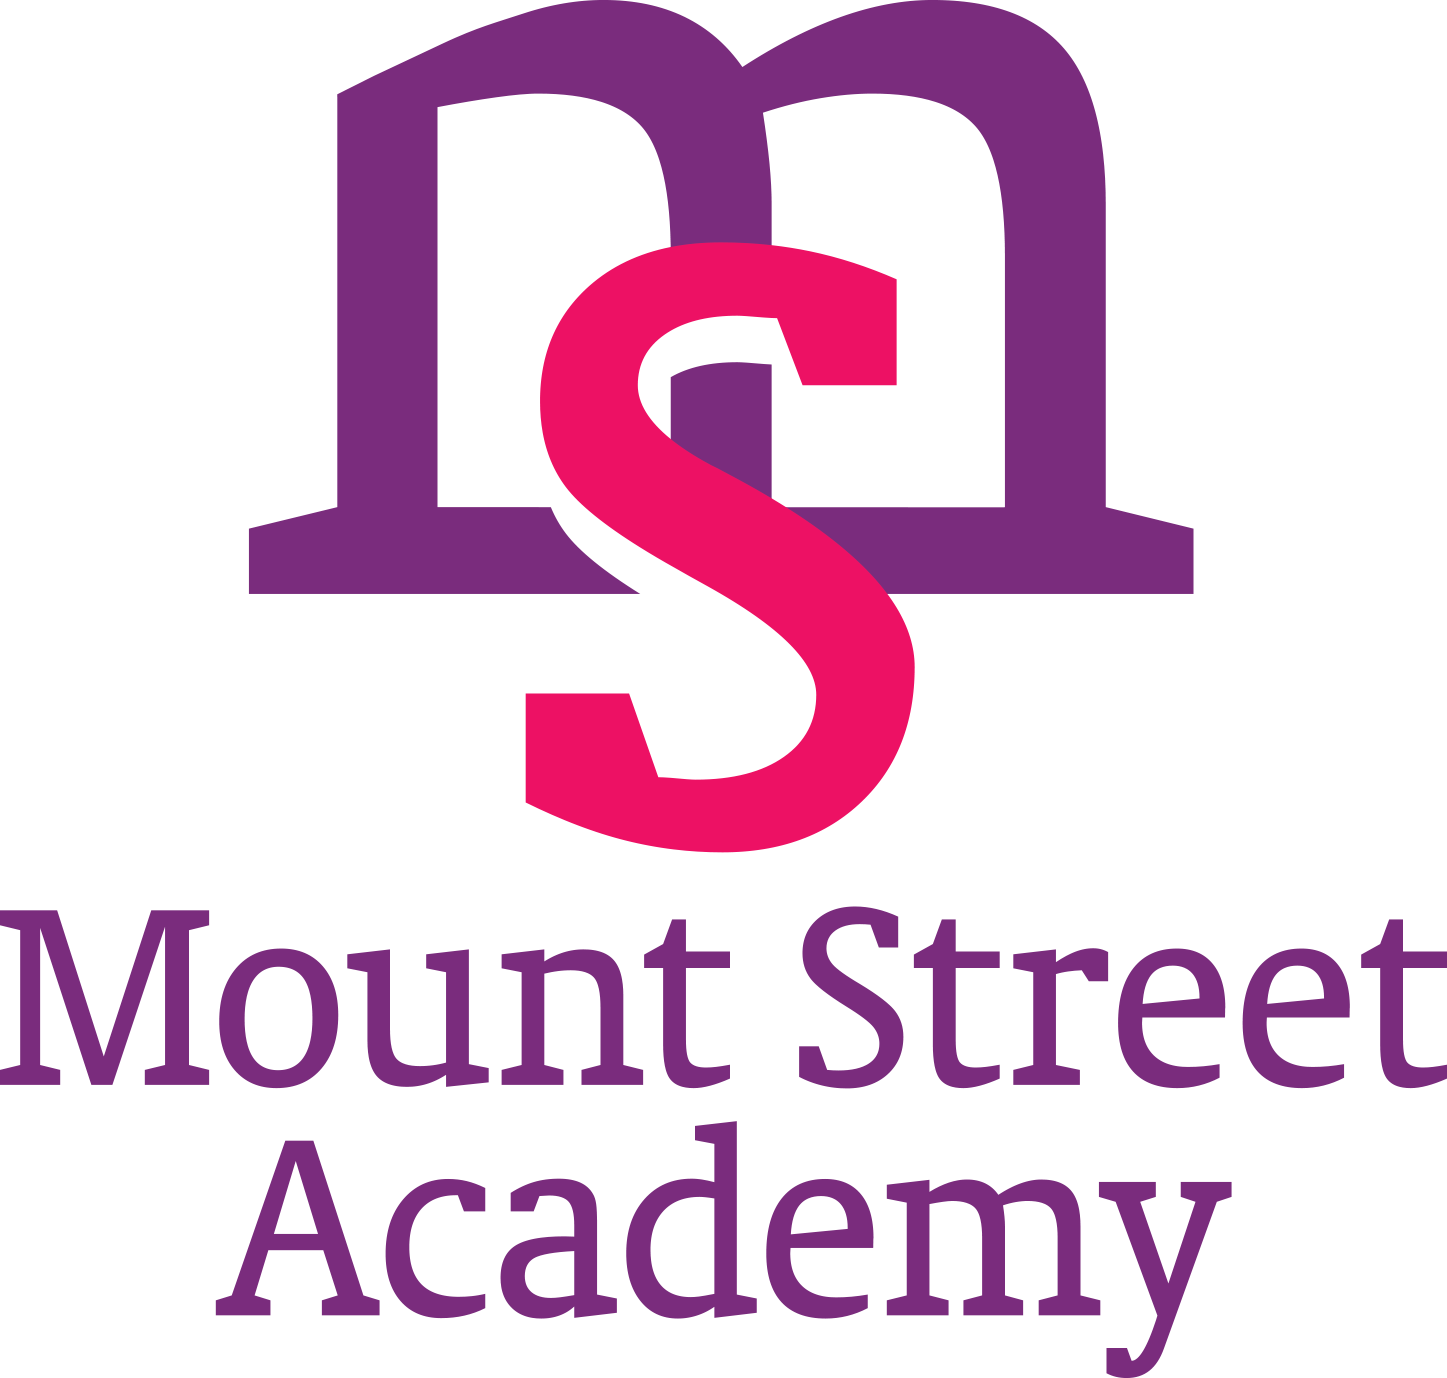 Mount Street Academy name